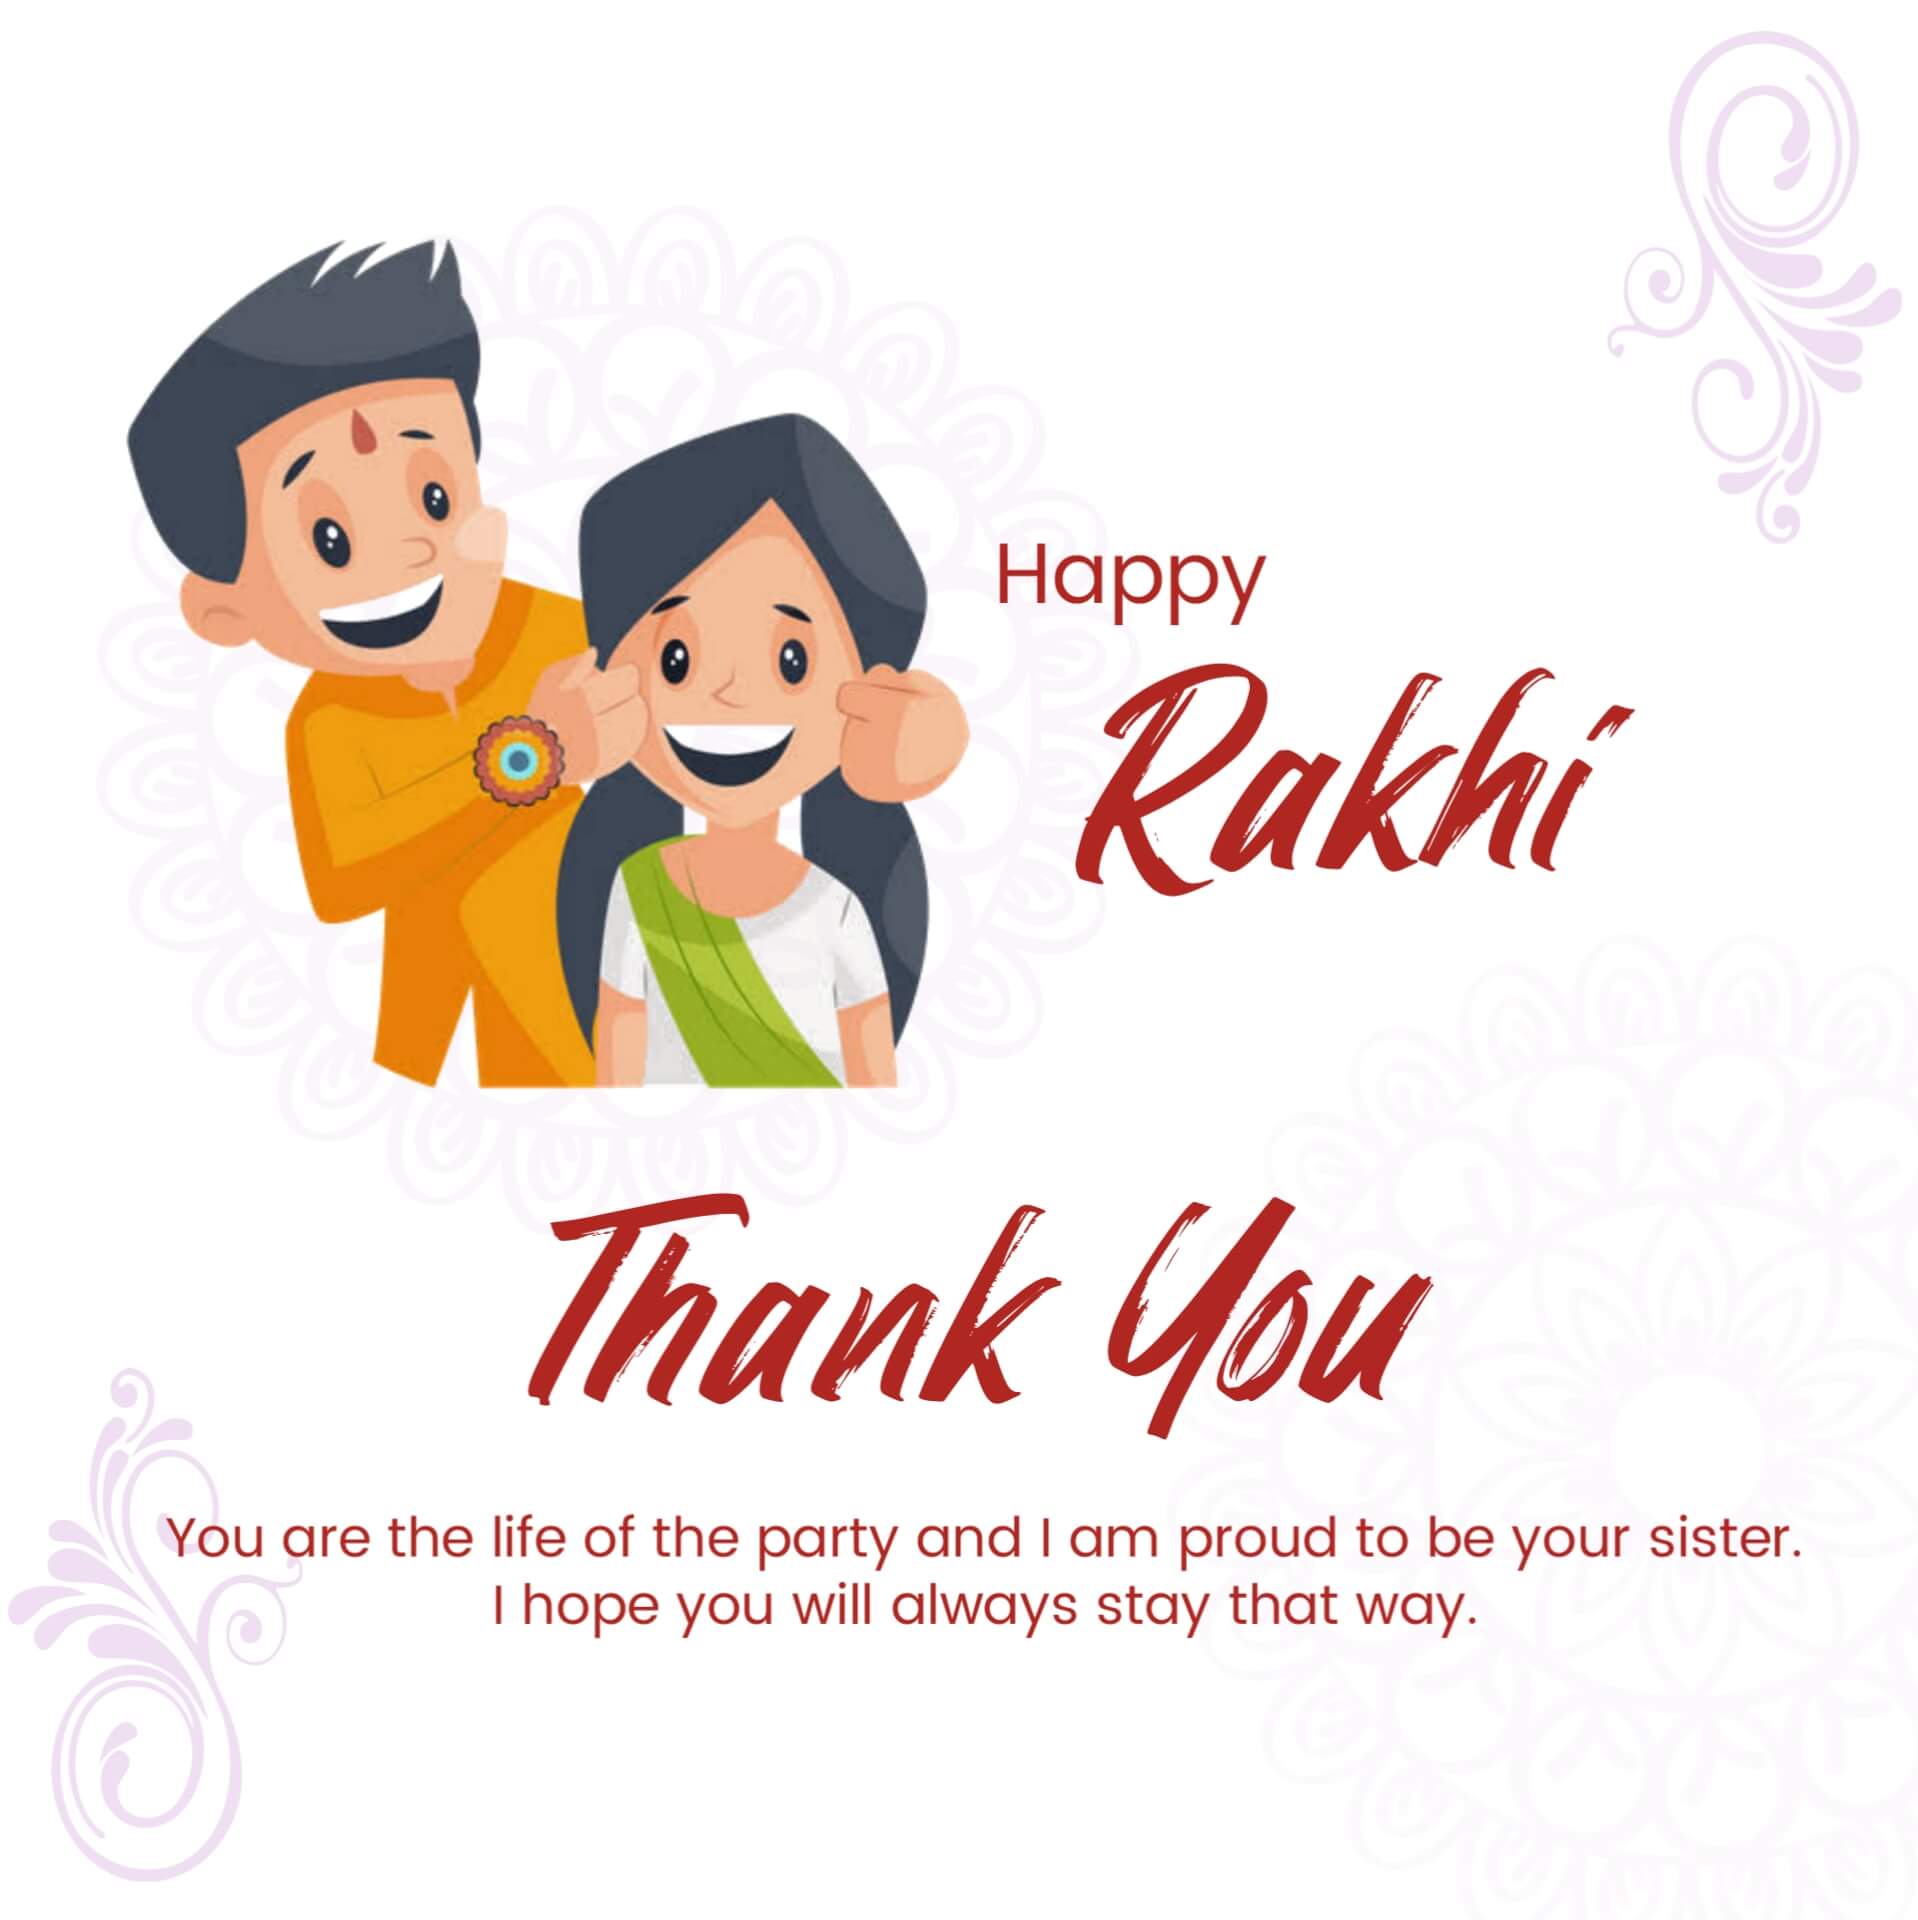 Raksha Bandhan wishes for Brother Image